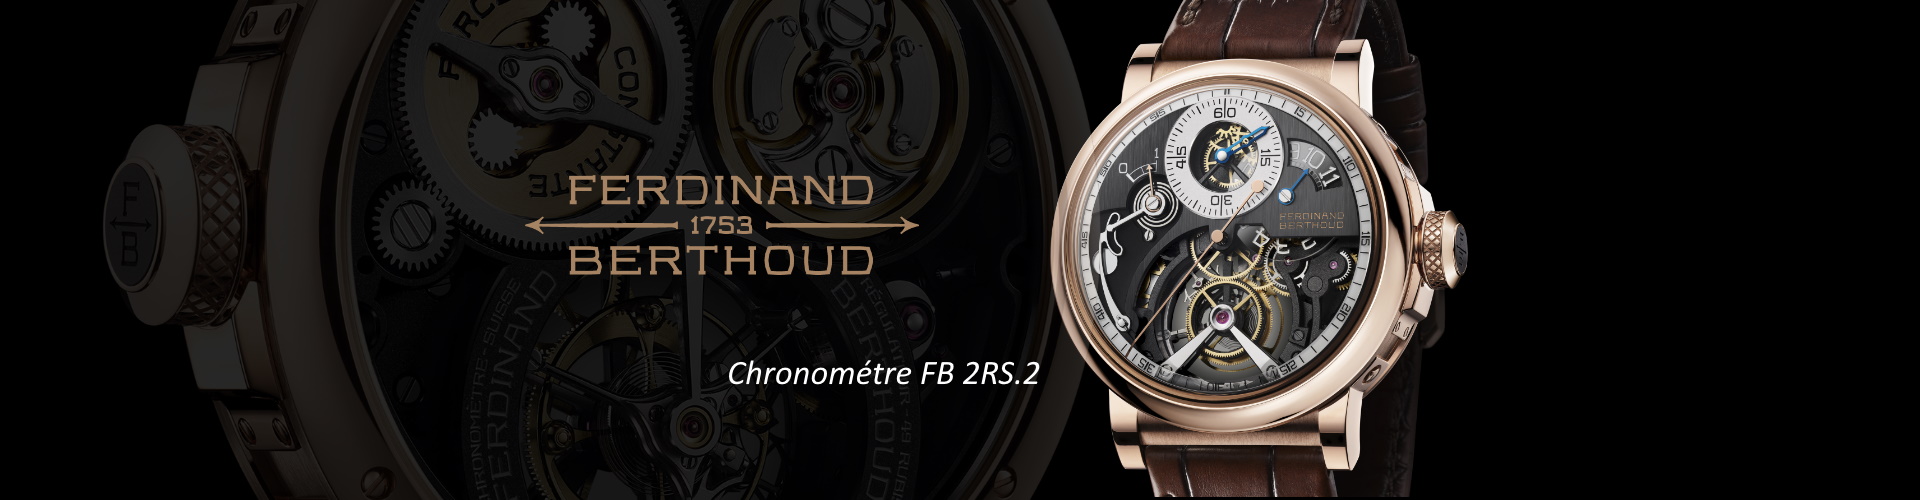 Ferdinand Berthoud Chronometre FB 2RS.2